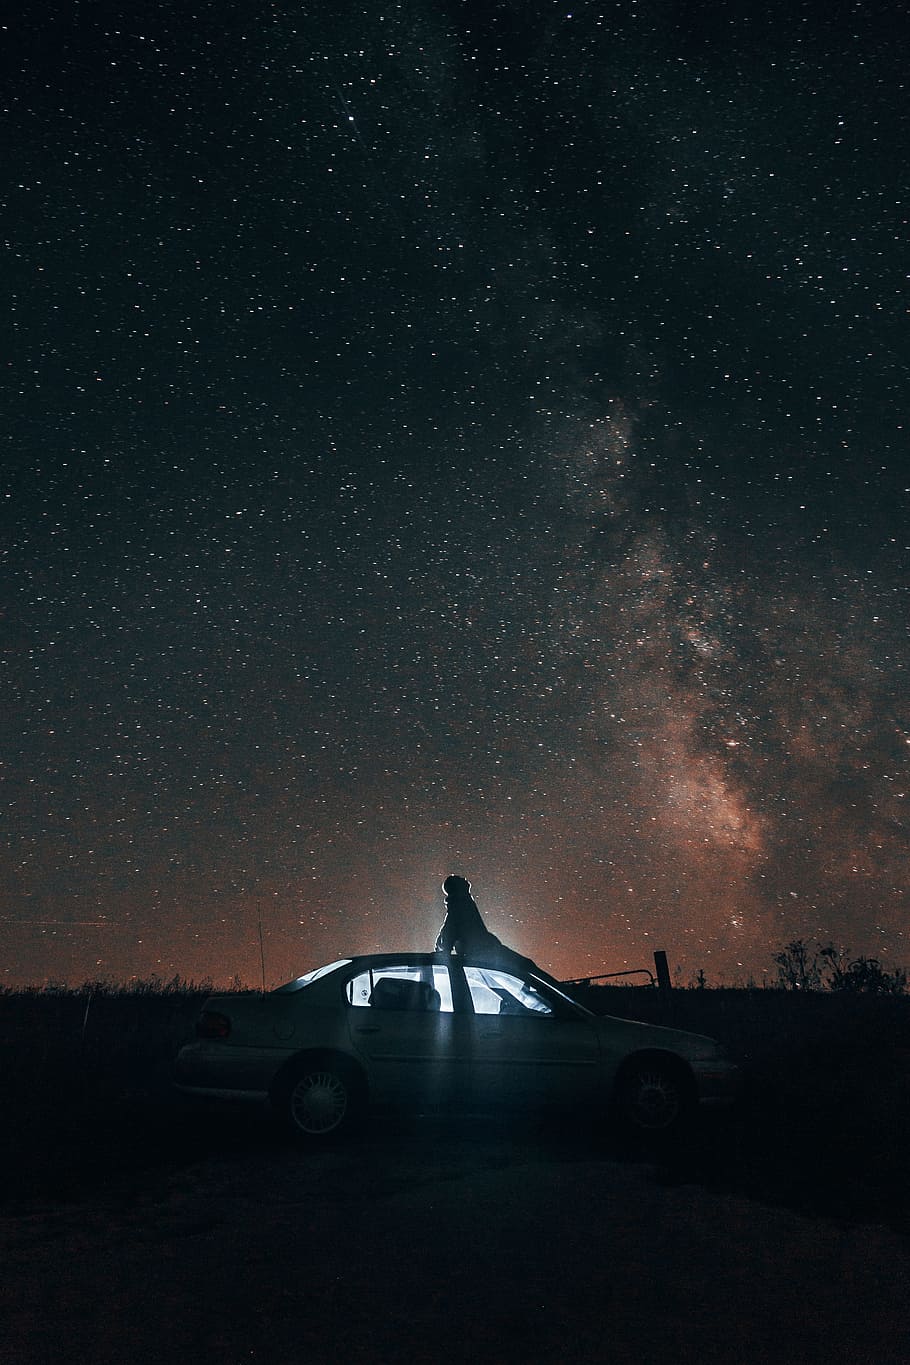 HD wallpaper: white sedan under blue sky, star, car, person, looking up,  galaxy